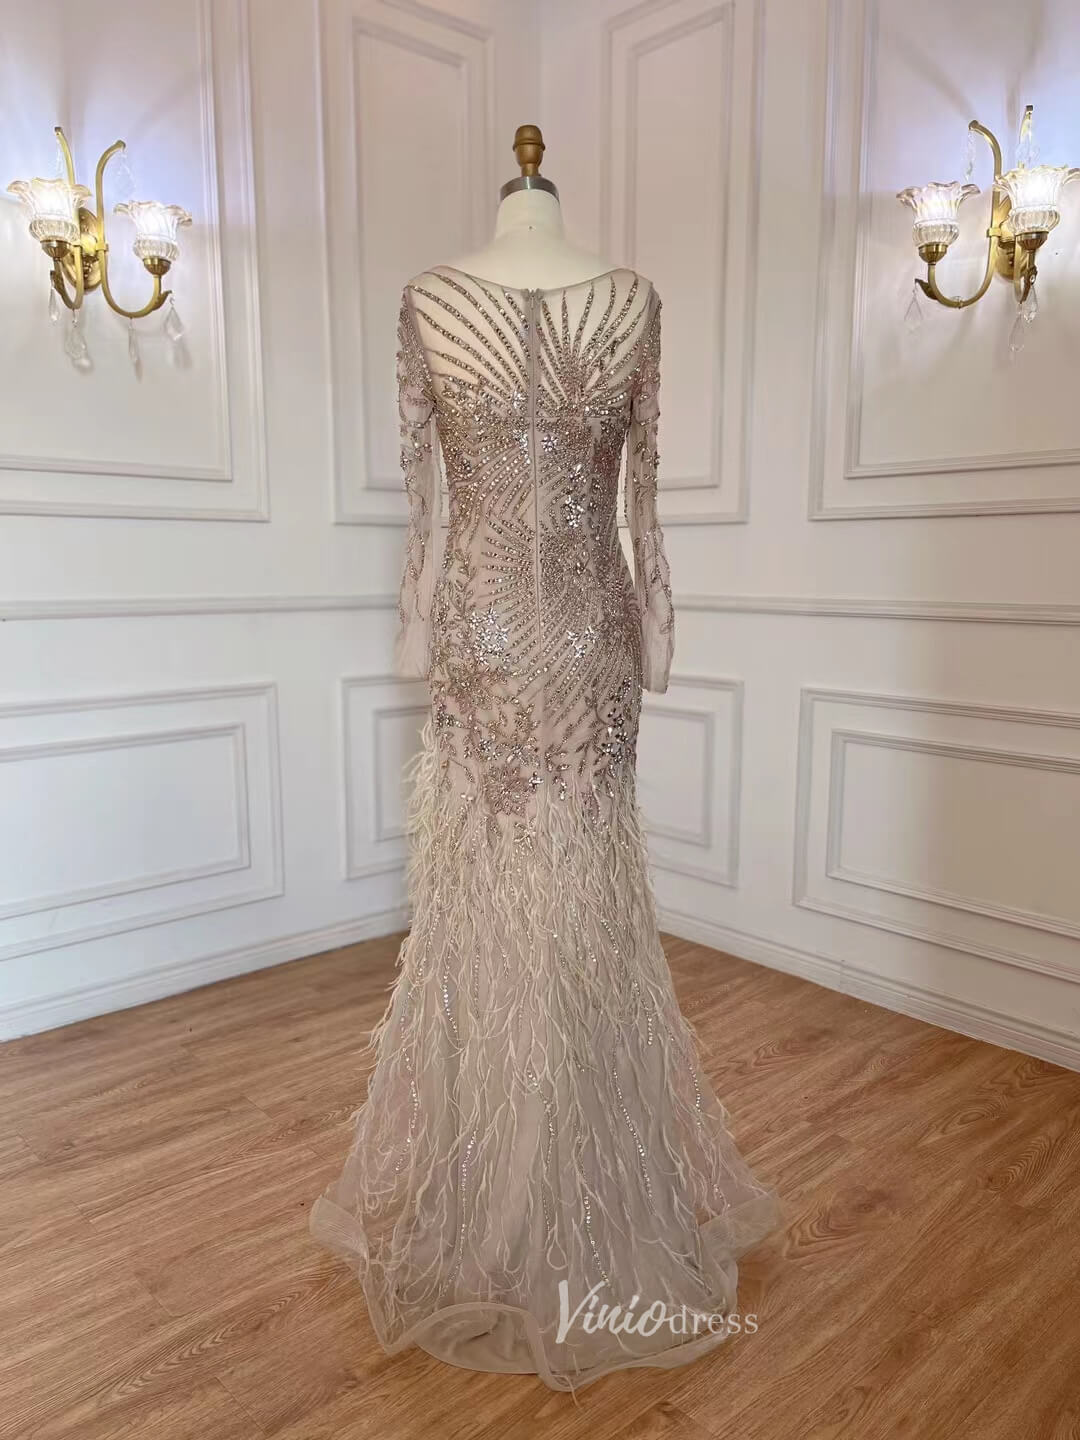 Beaded Feather 1920s Evening Dress Long Sleeve Prom Dresses 20061-prom dresses-Viniodress-Viniodress